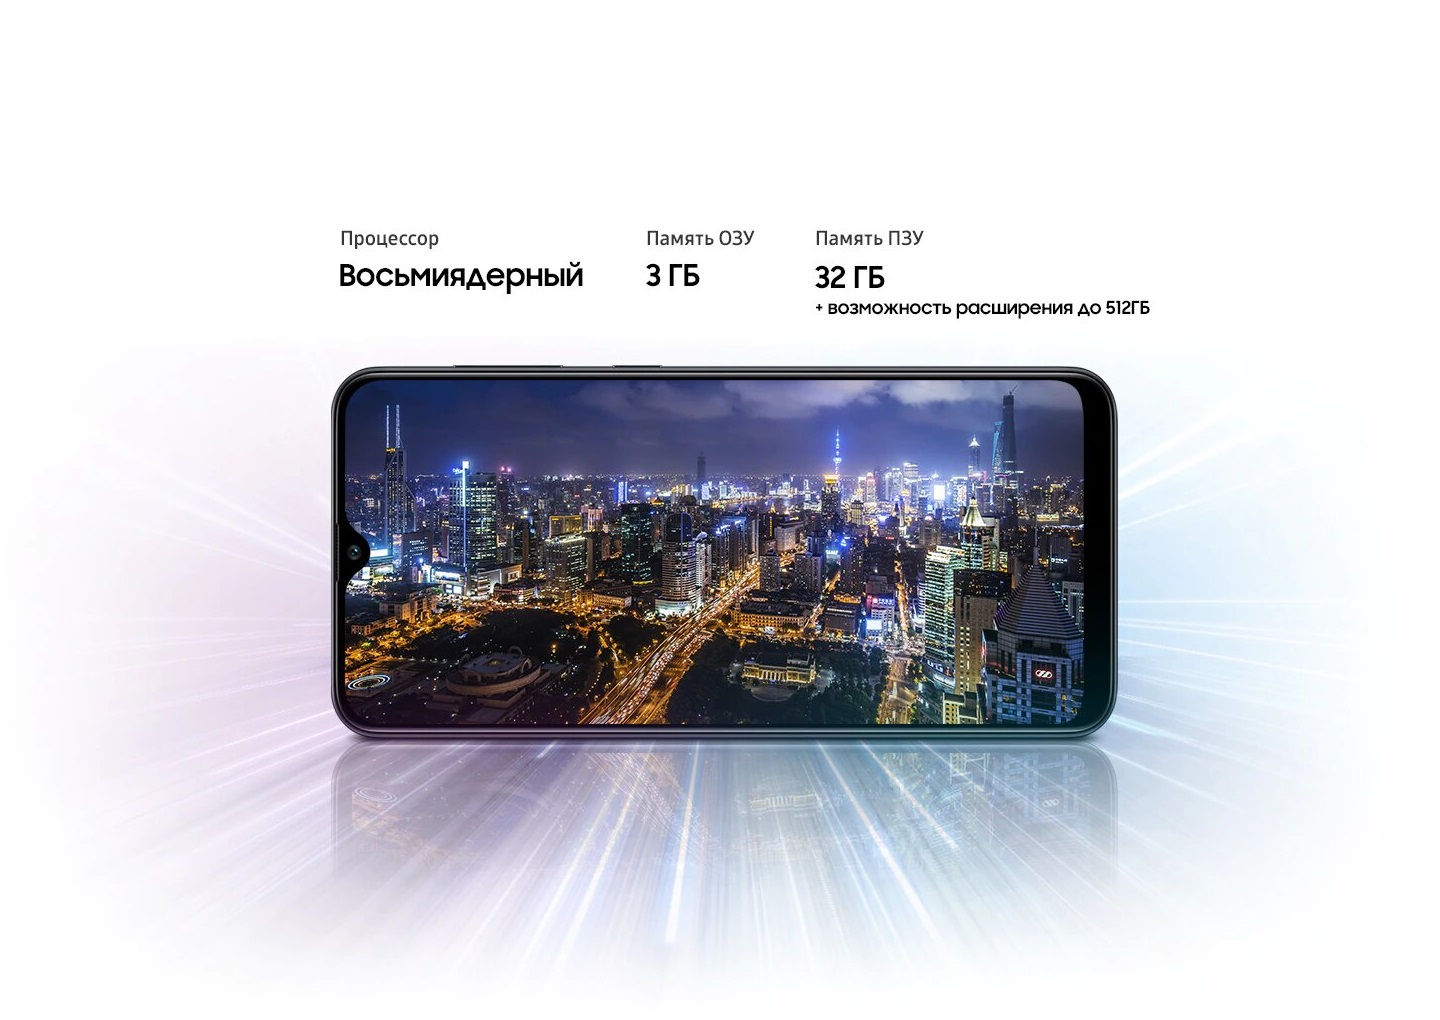 Смартфон Samsung Galaxy A20s